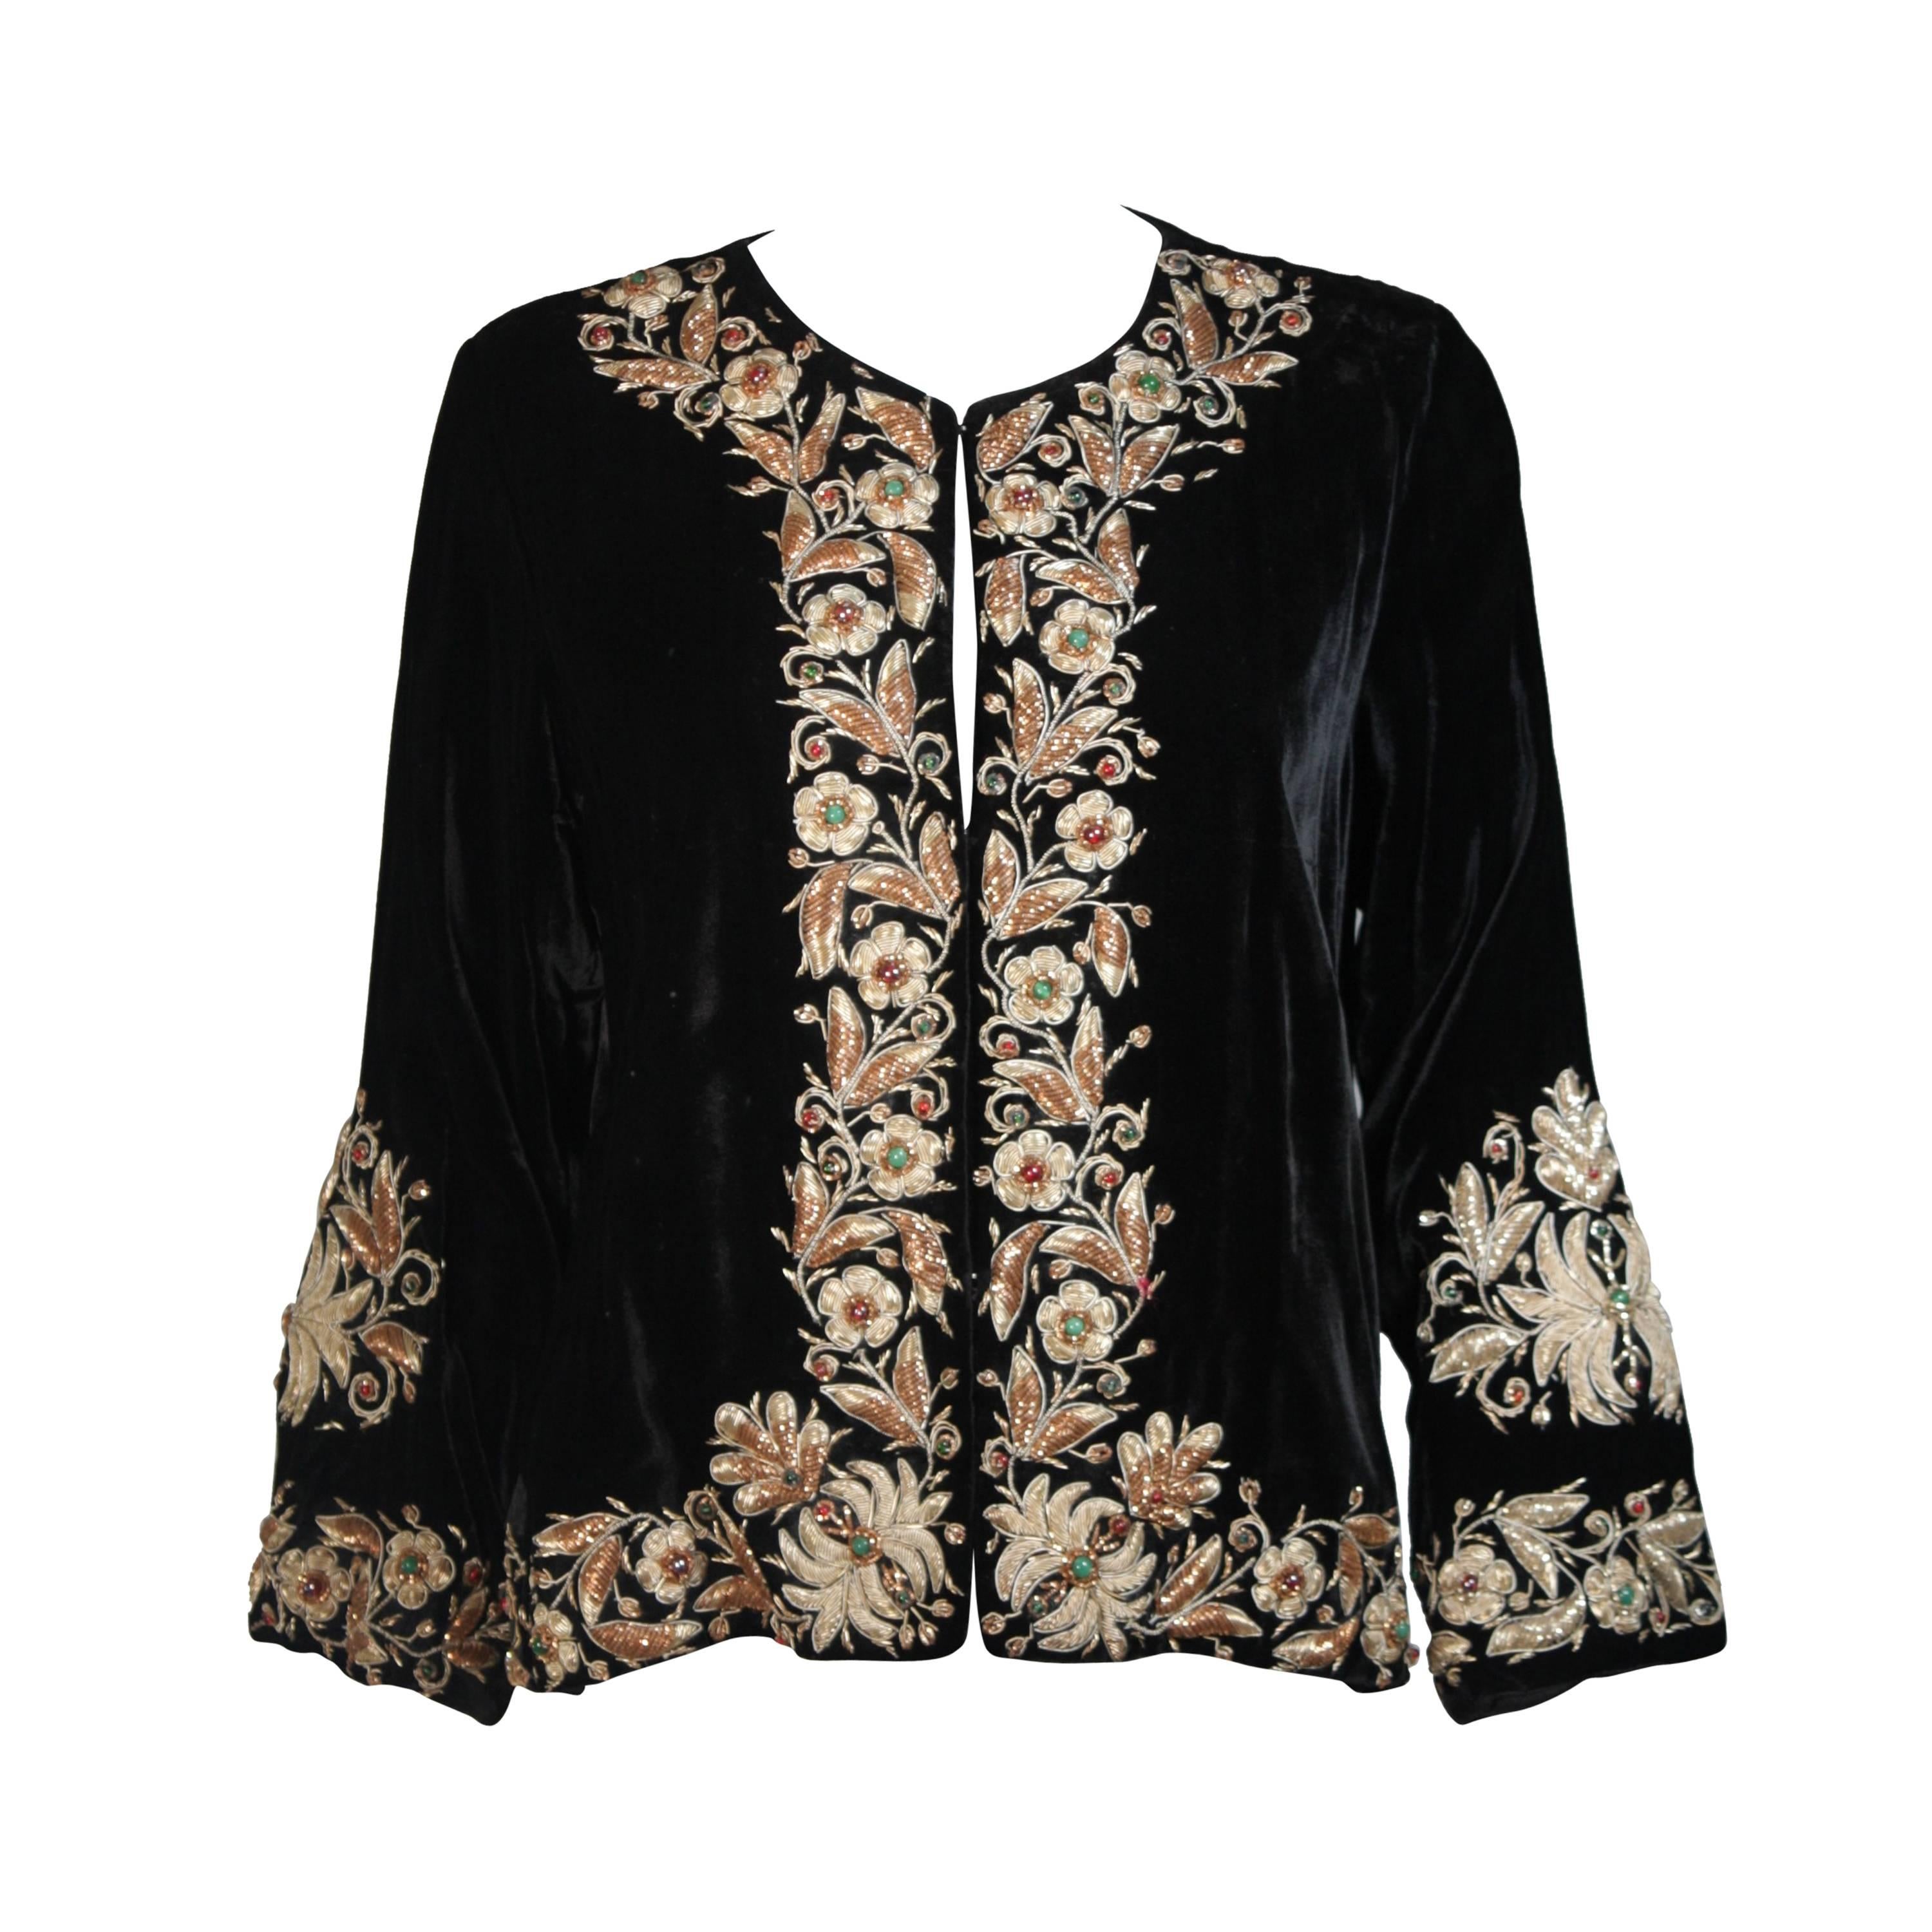 Velvet Jacket with Metallic Embroidery and Embellishment Size Small Medium Large